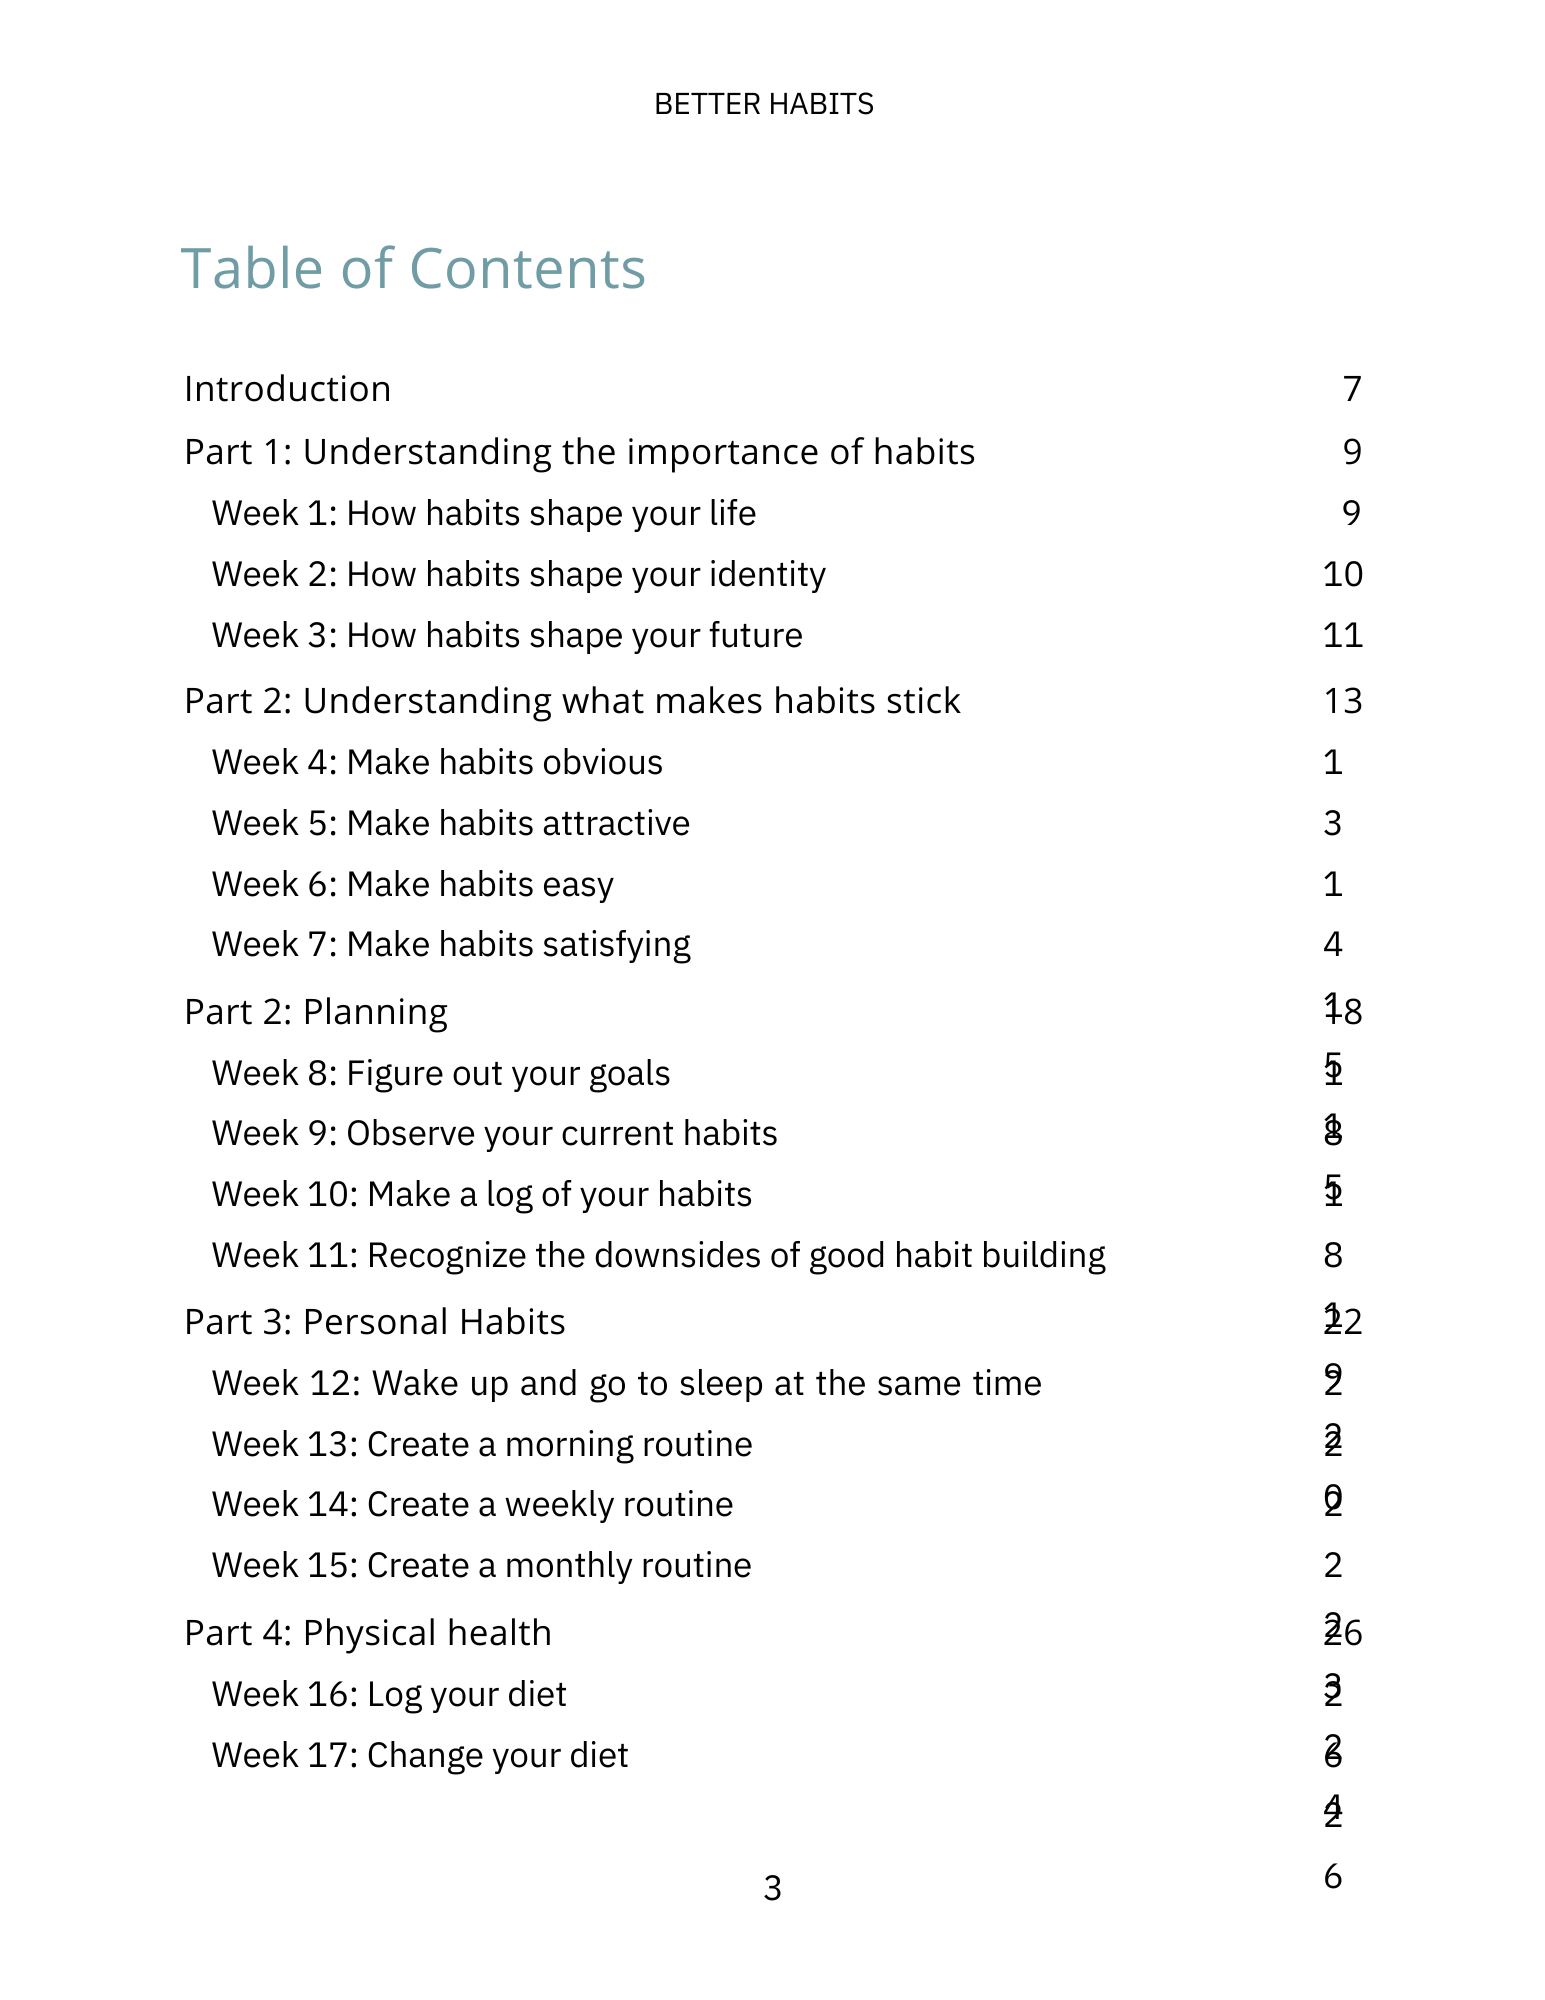 Better Habits PDF Ebook 52 Week Guide to Build Better Habits - Download Delight